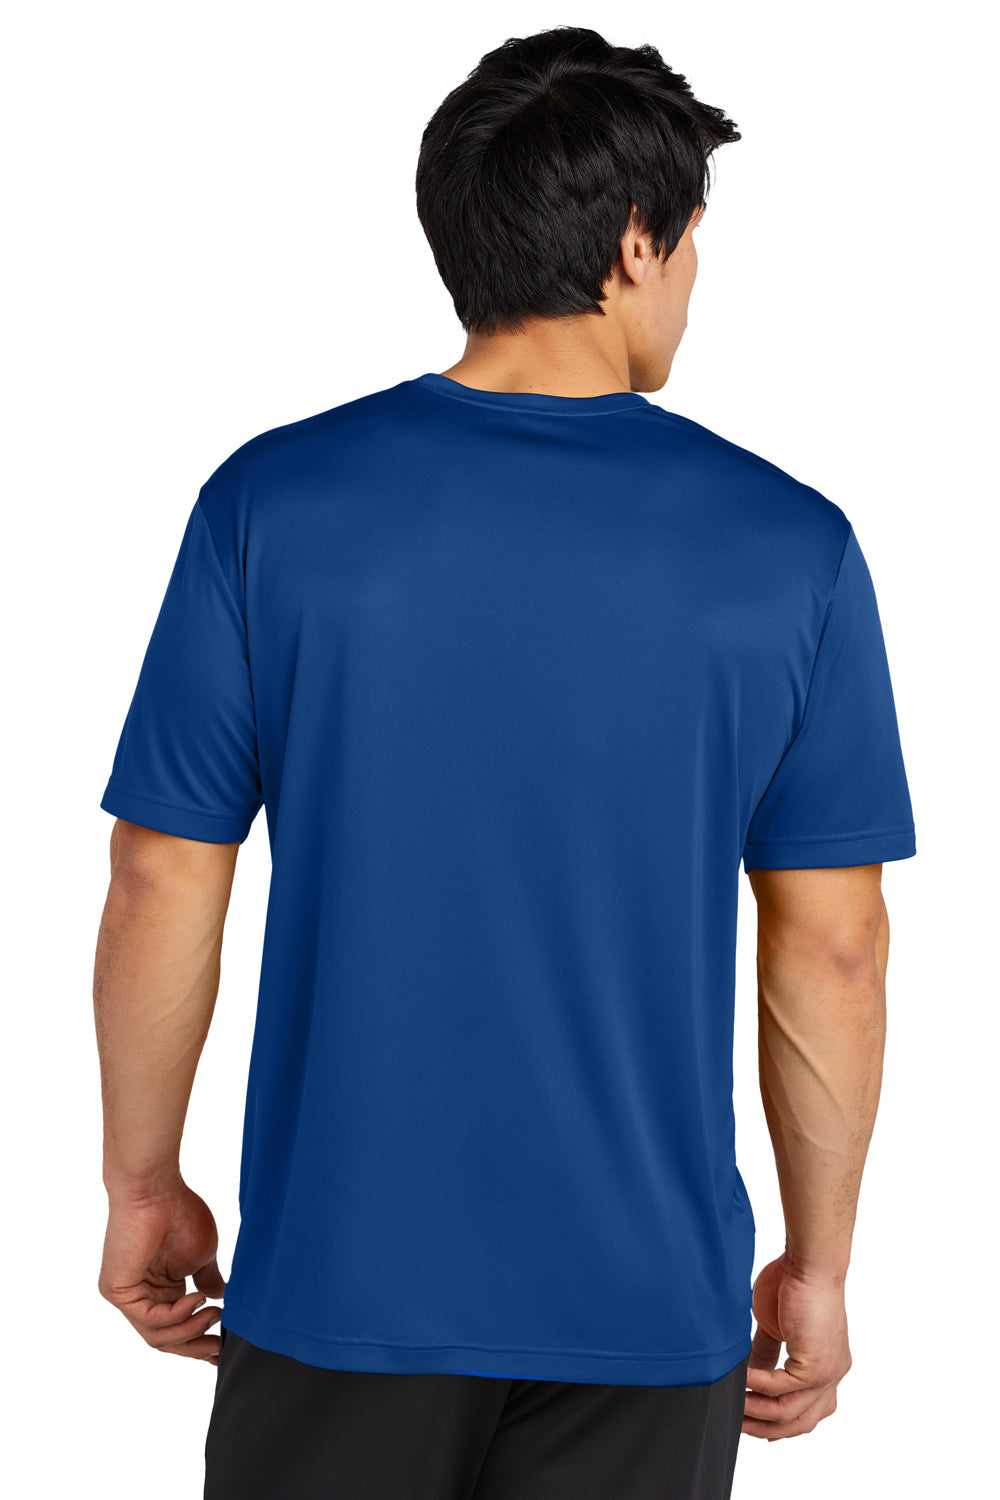 Sport-Tek ST720 Re-Compete PosiCharge Short Sleeve Crewneck T-Shirt True Royal Blue Back